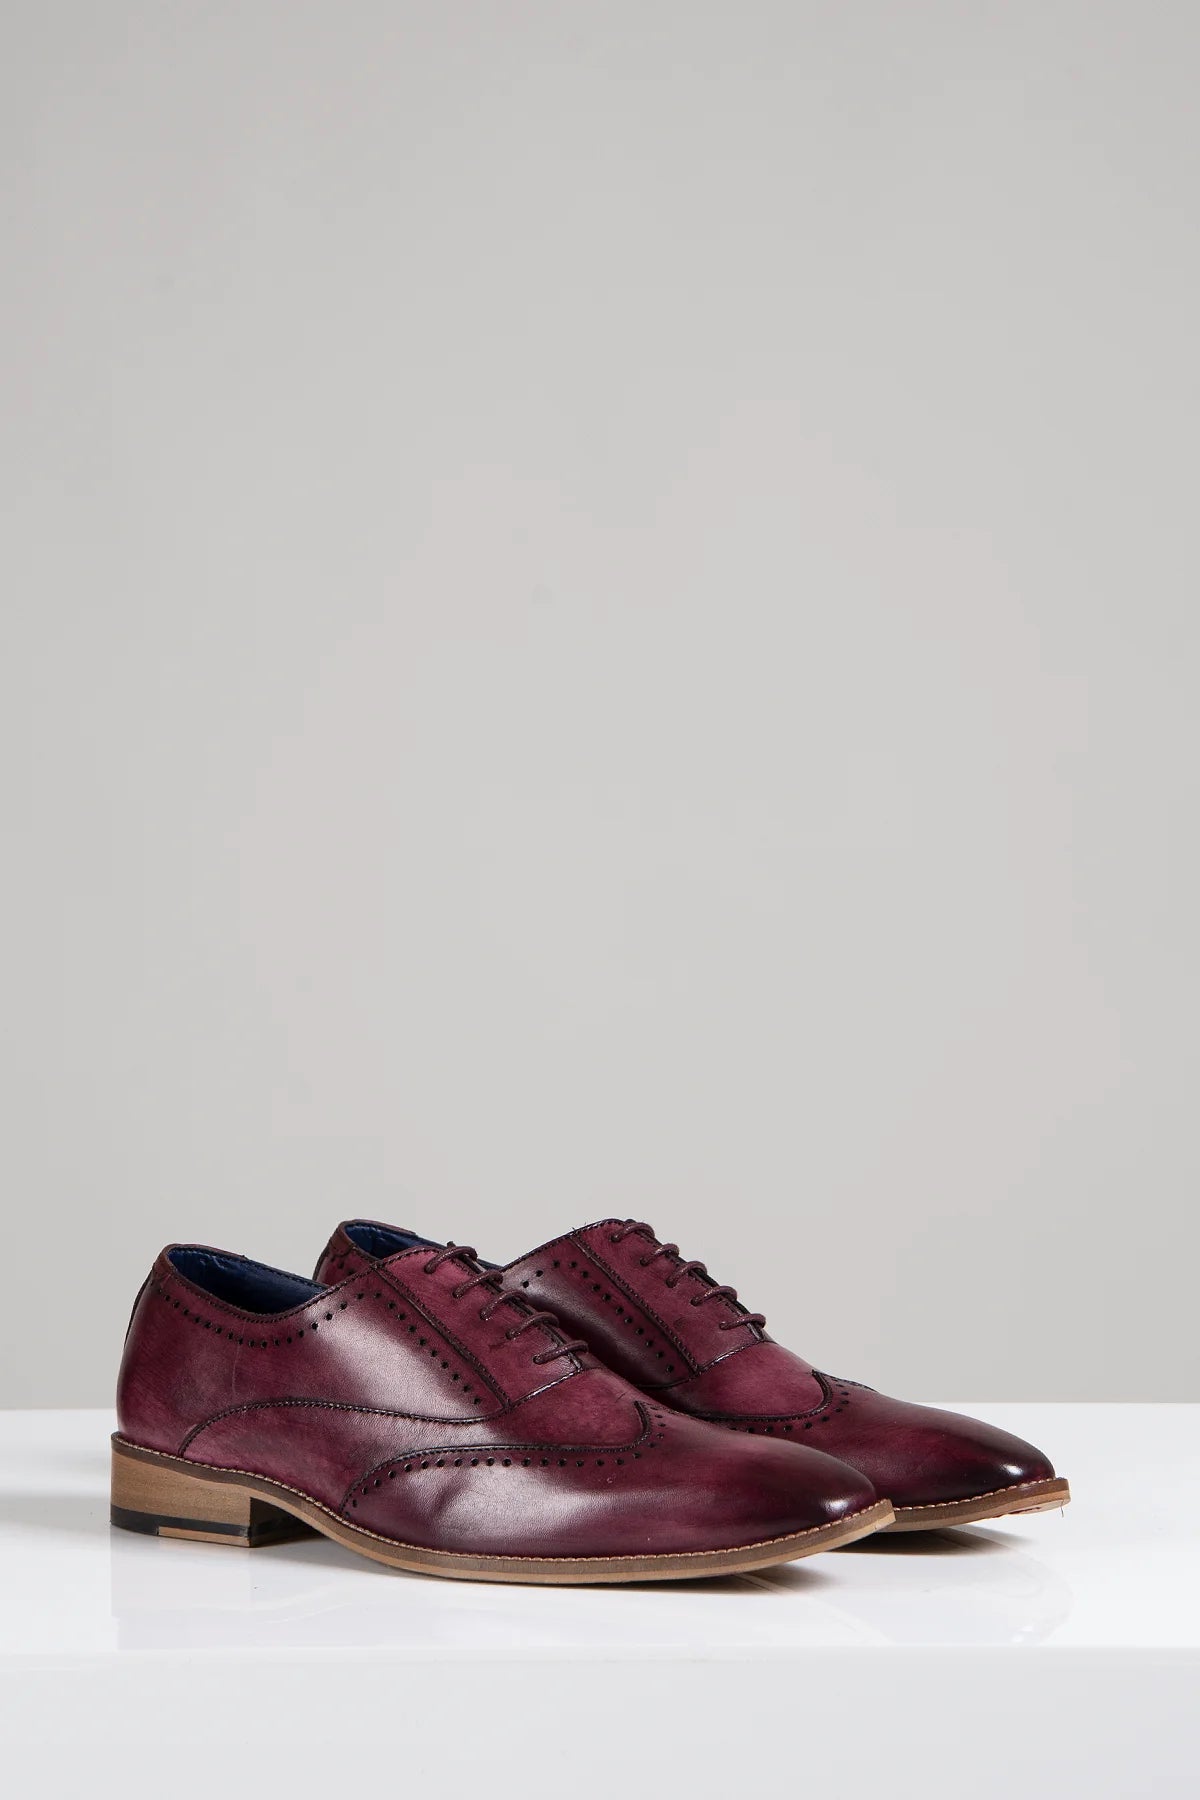 Marc Darcy Carson Dark Bordo Leather Oxford Brogue Shoes